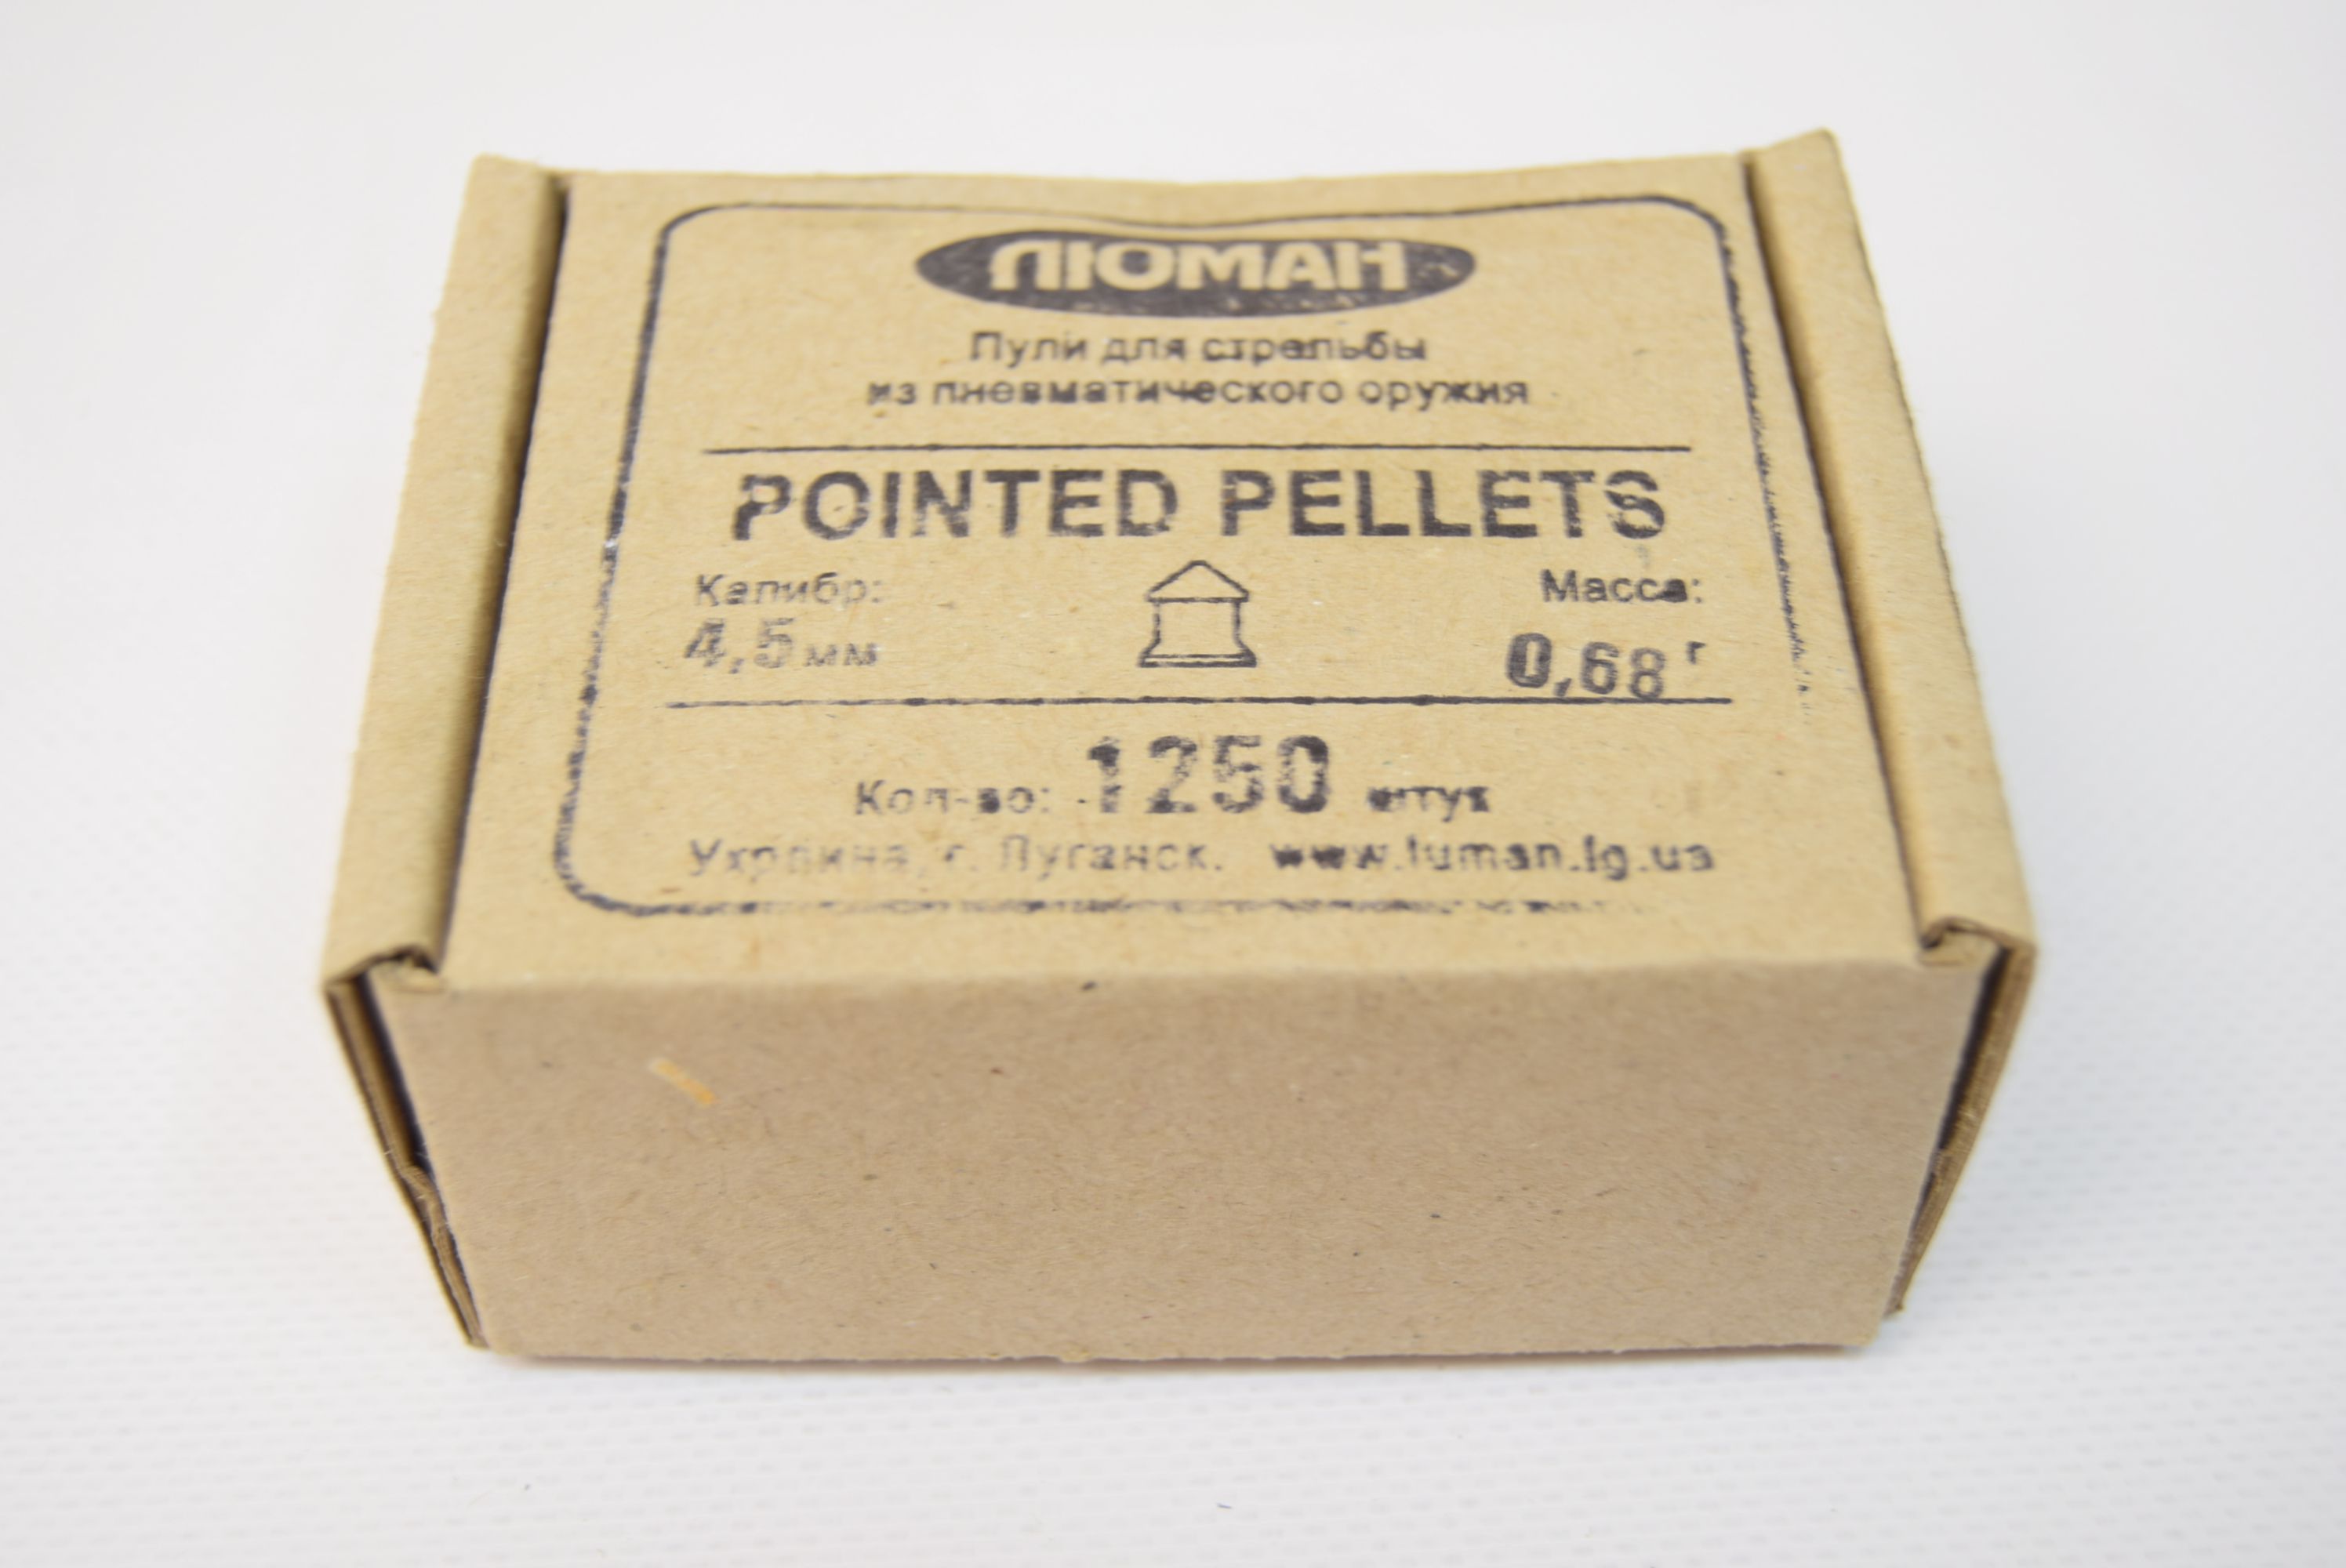 Пули Люман Pointed Pellets 4,5 мм, 0,68 грамм, 1250 штук